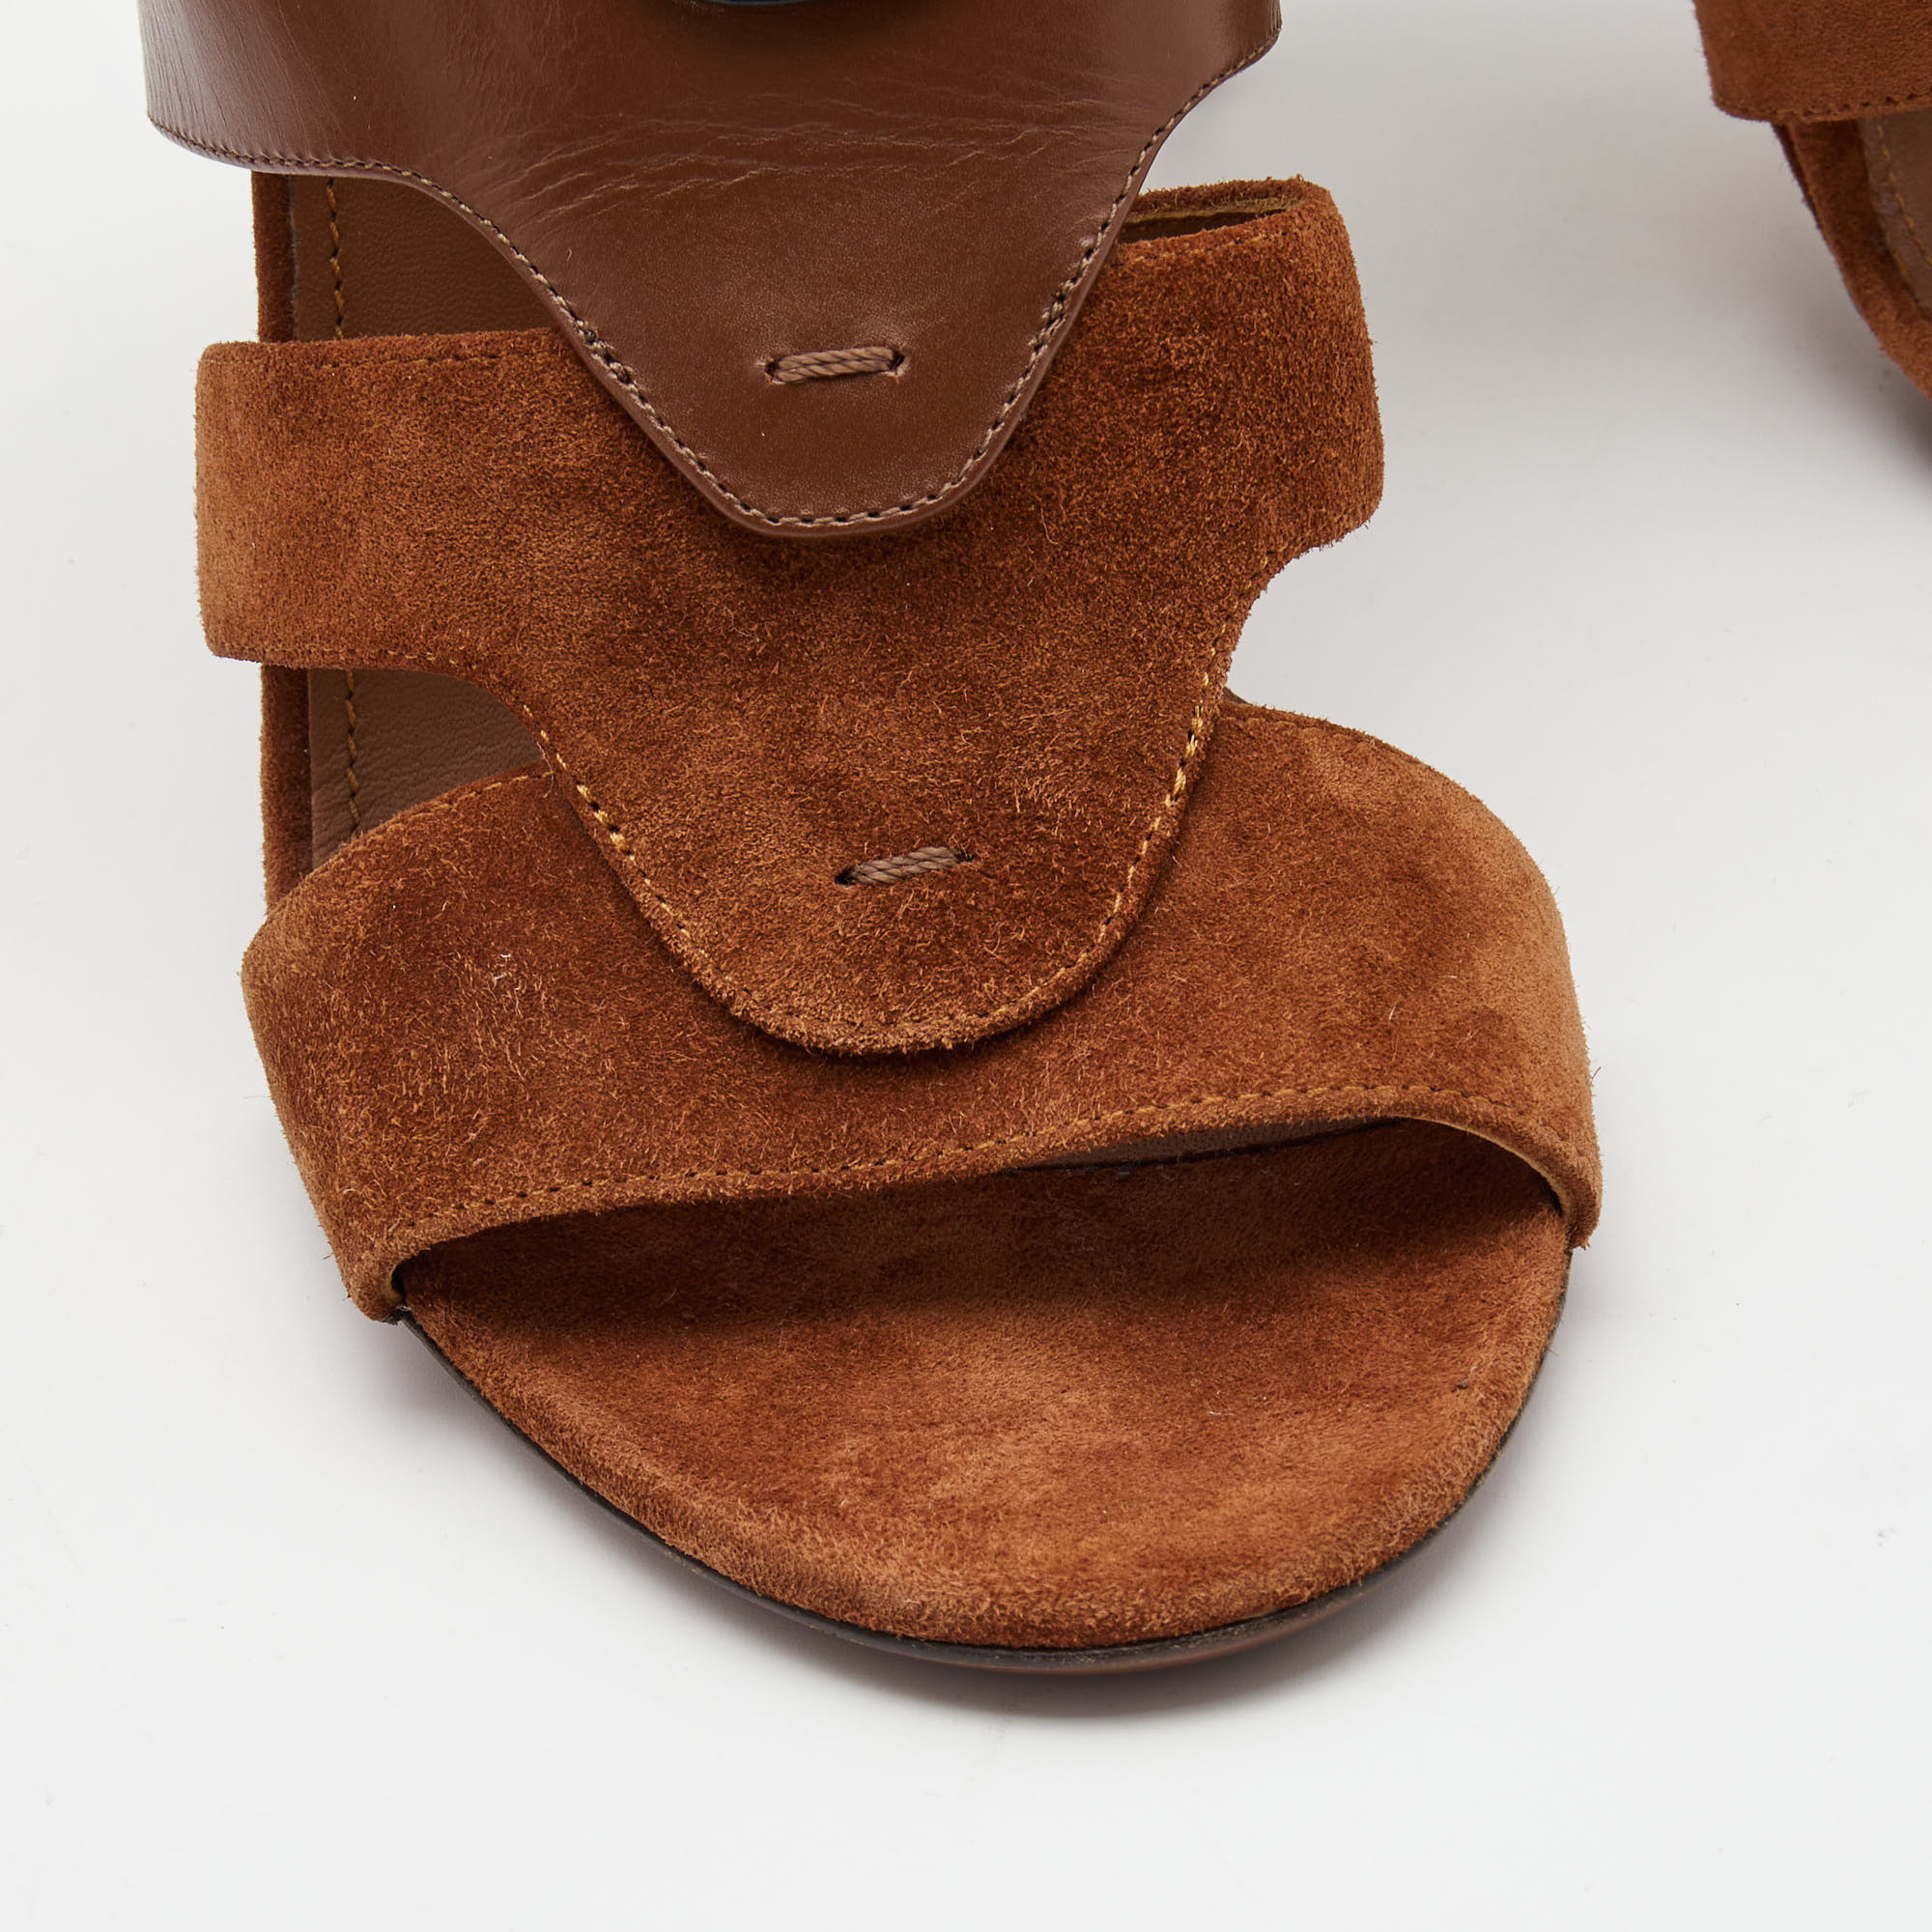 Salvatore Ferragamo Tricolor Suede And Python Leather Laos Strappy Sandals Size 37.5